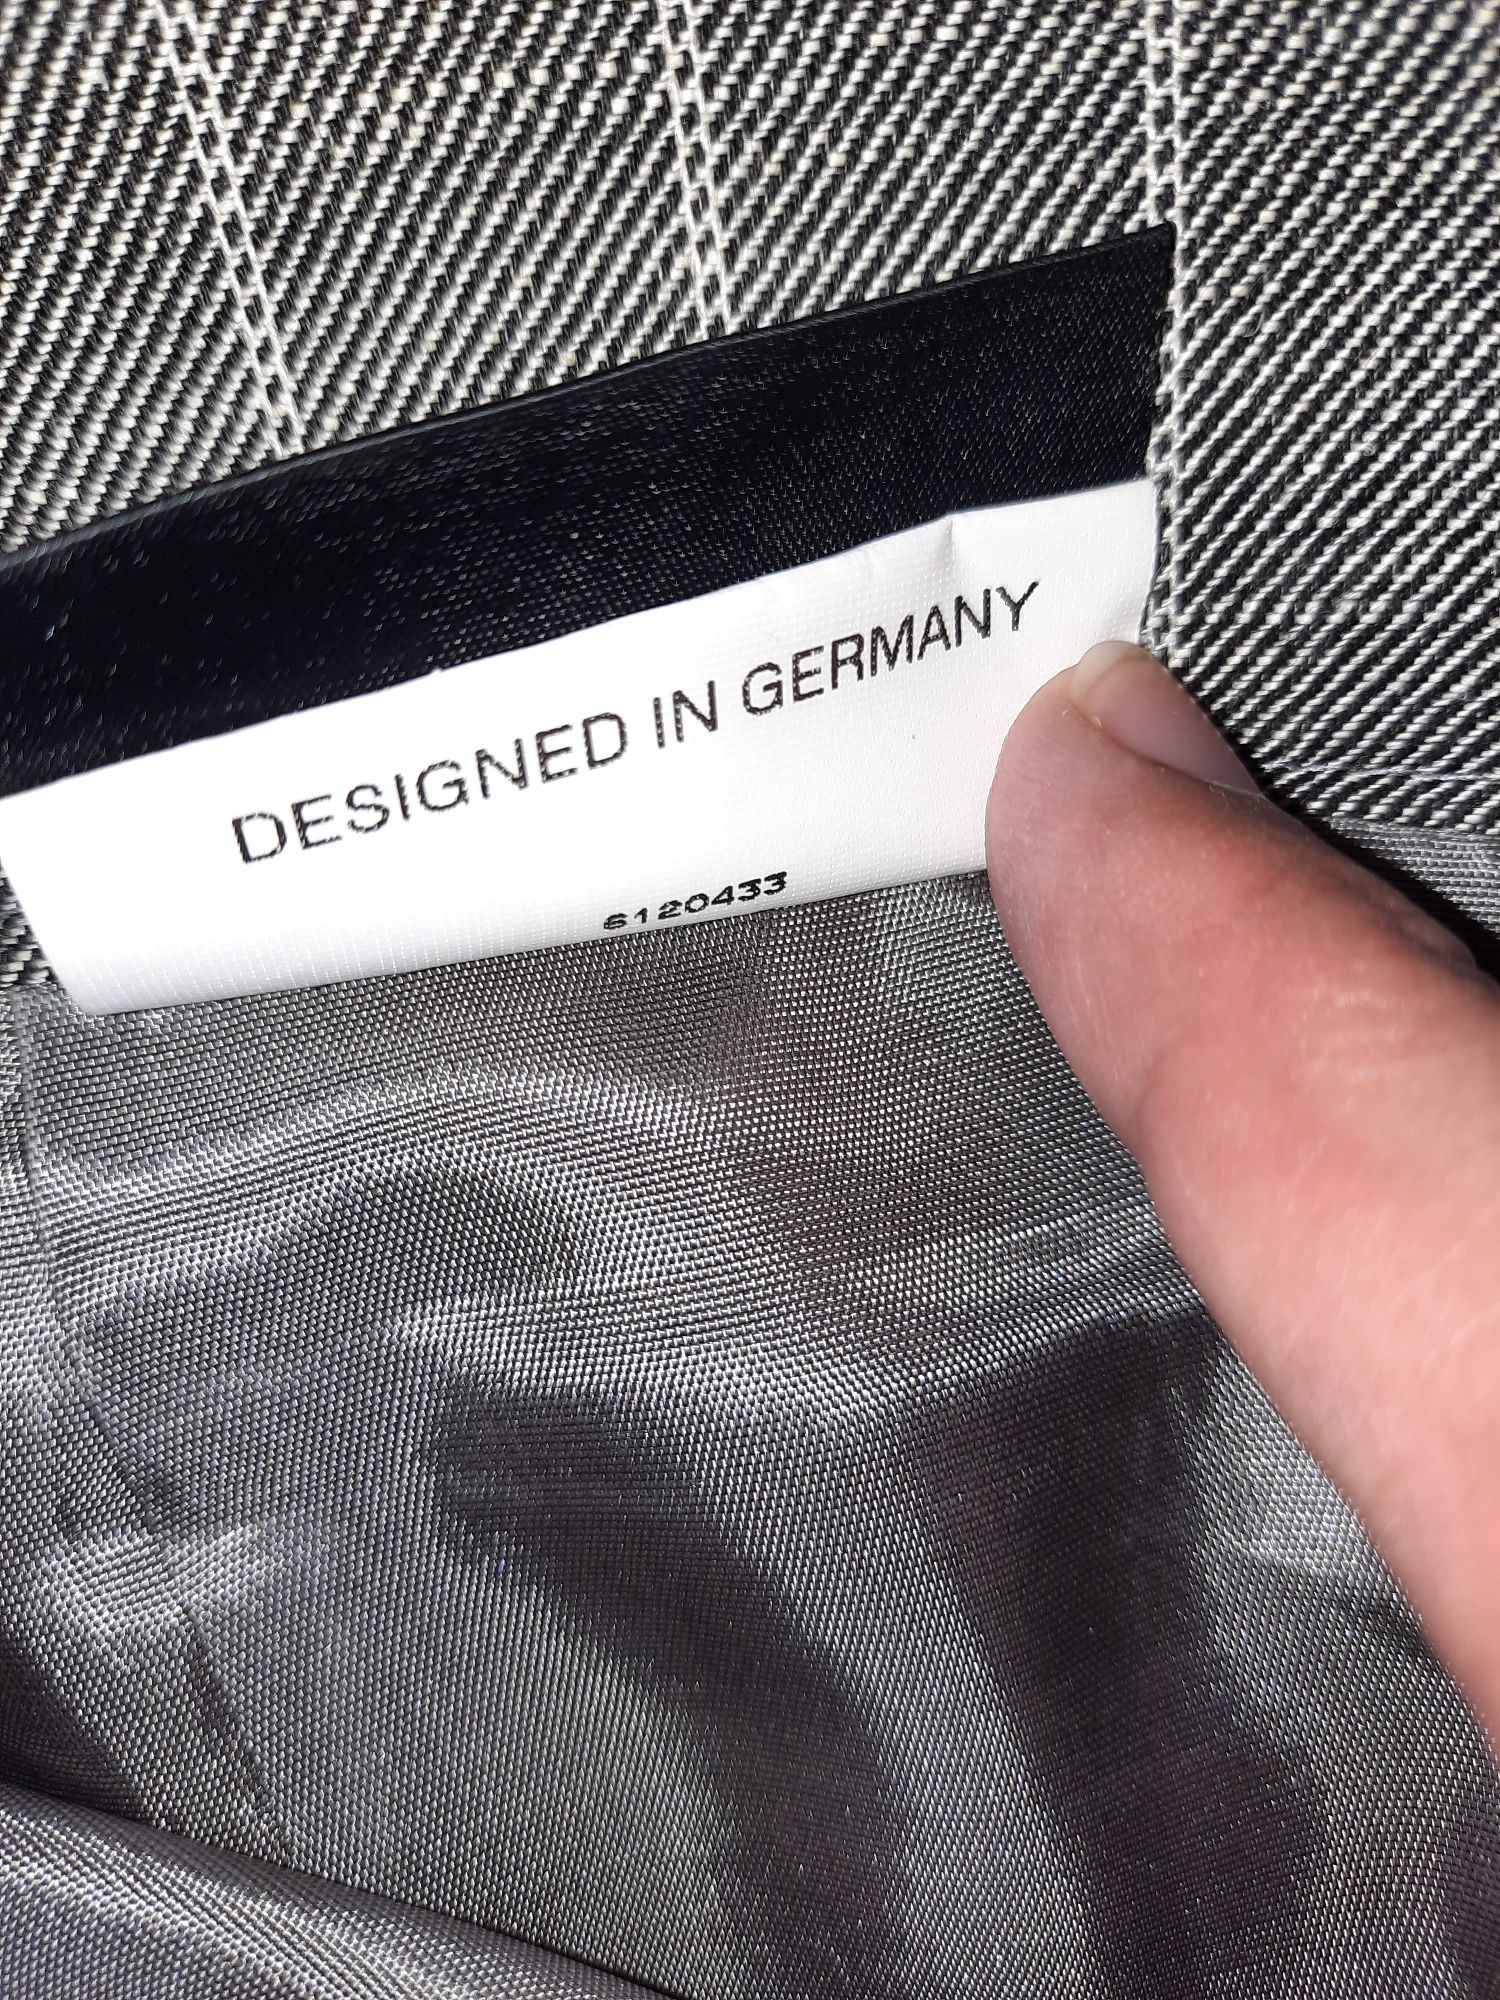 Льняная юбка бренда Tuzzi, Германия